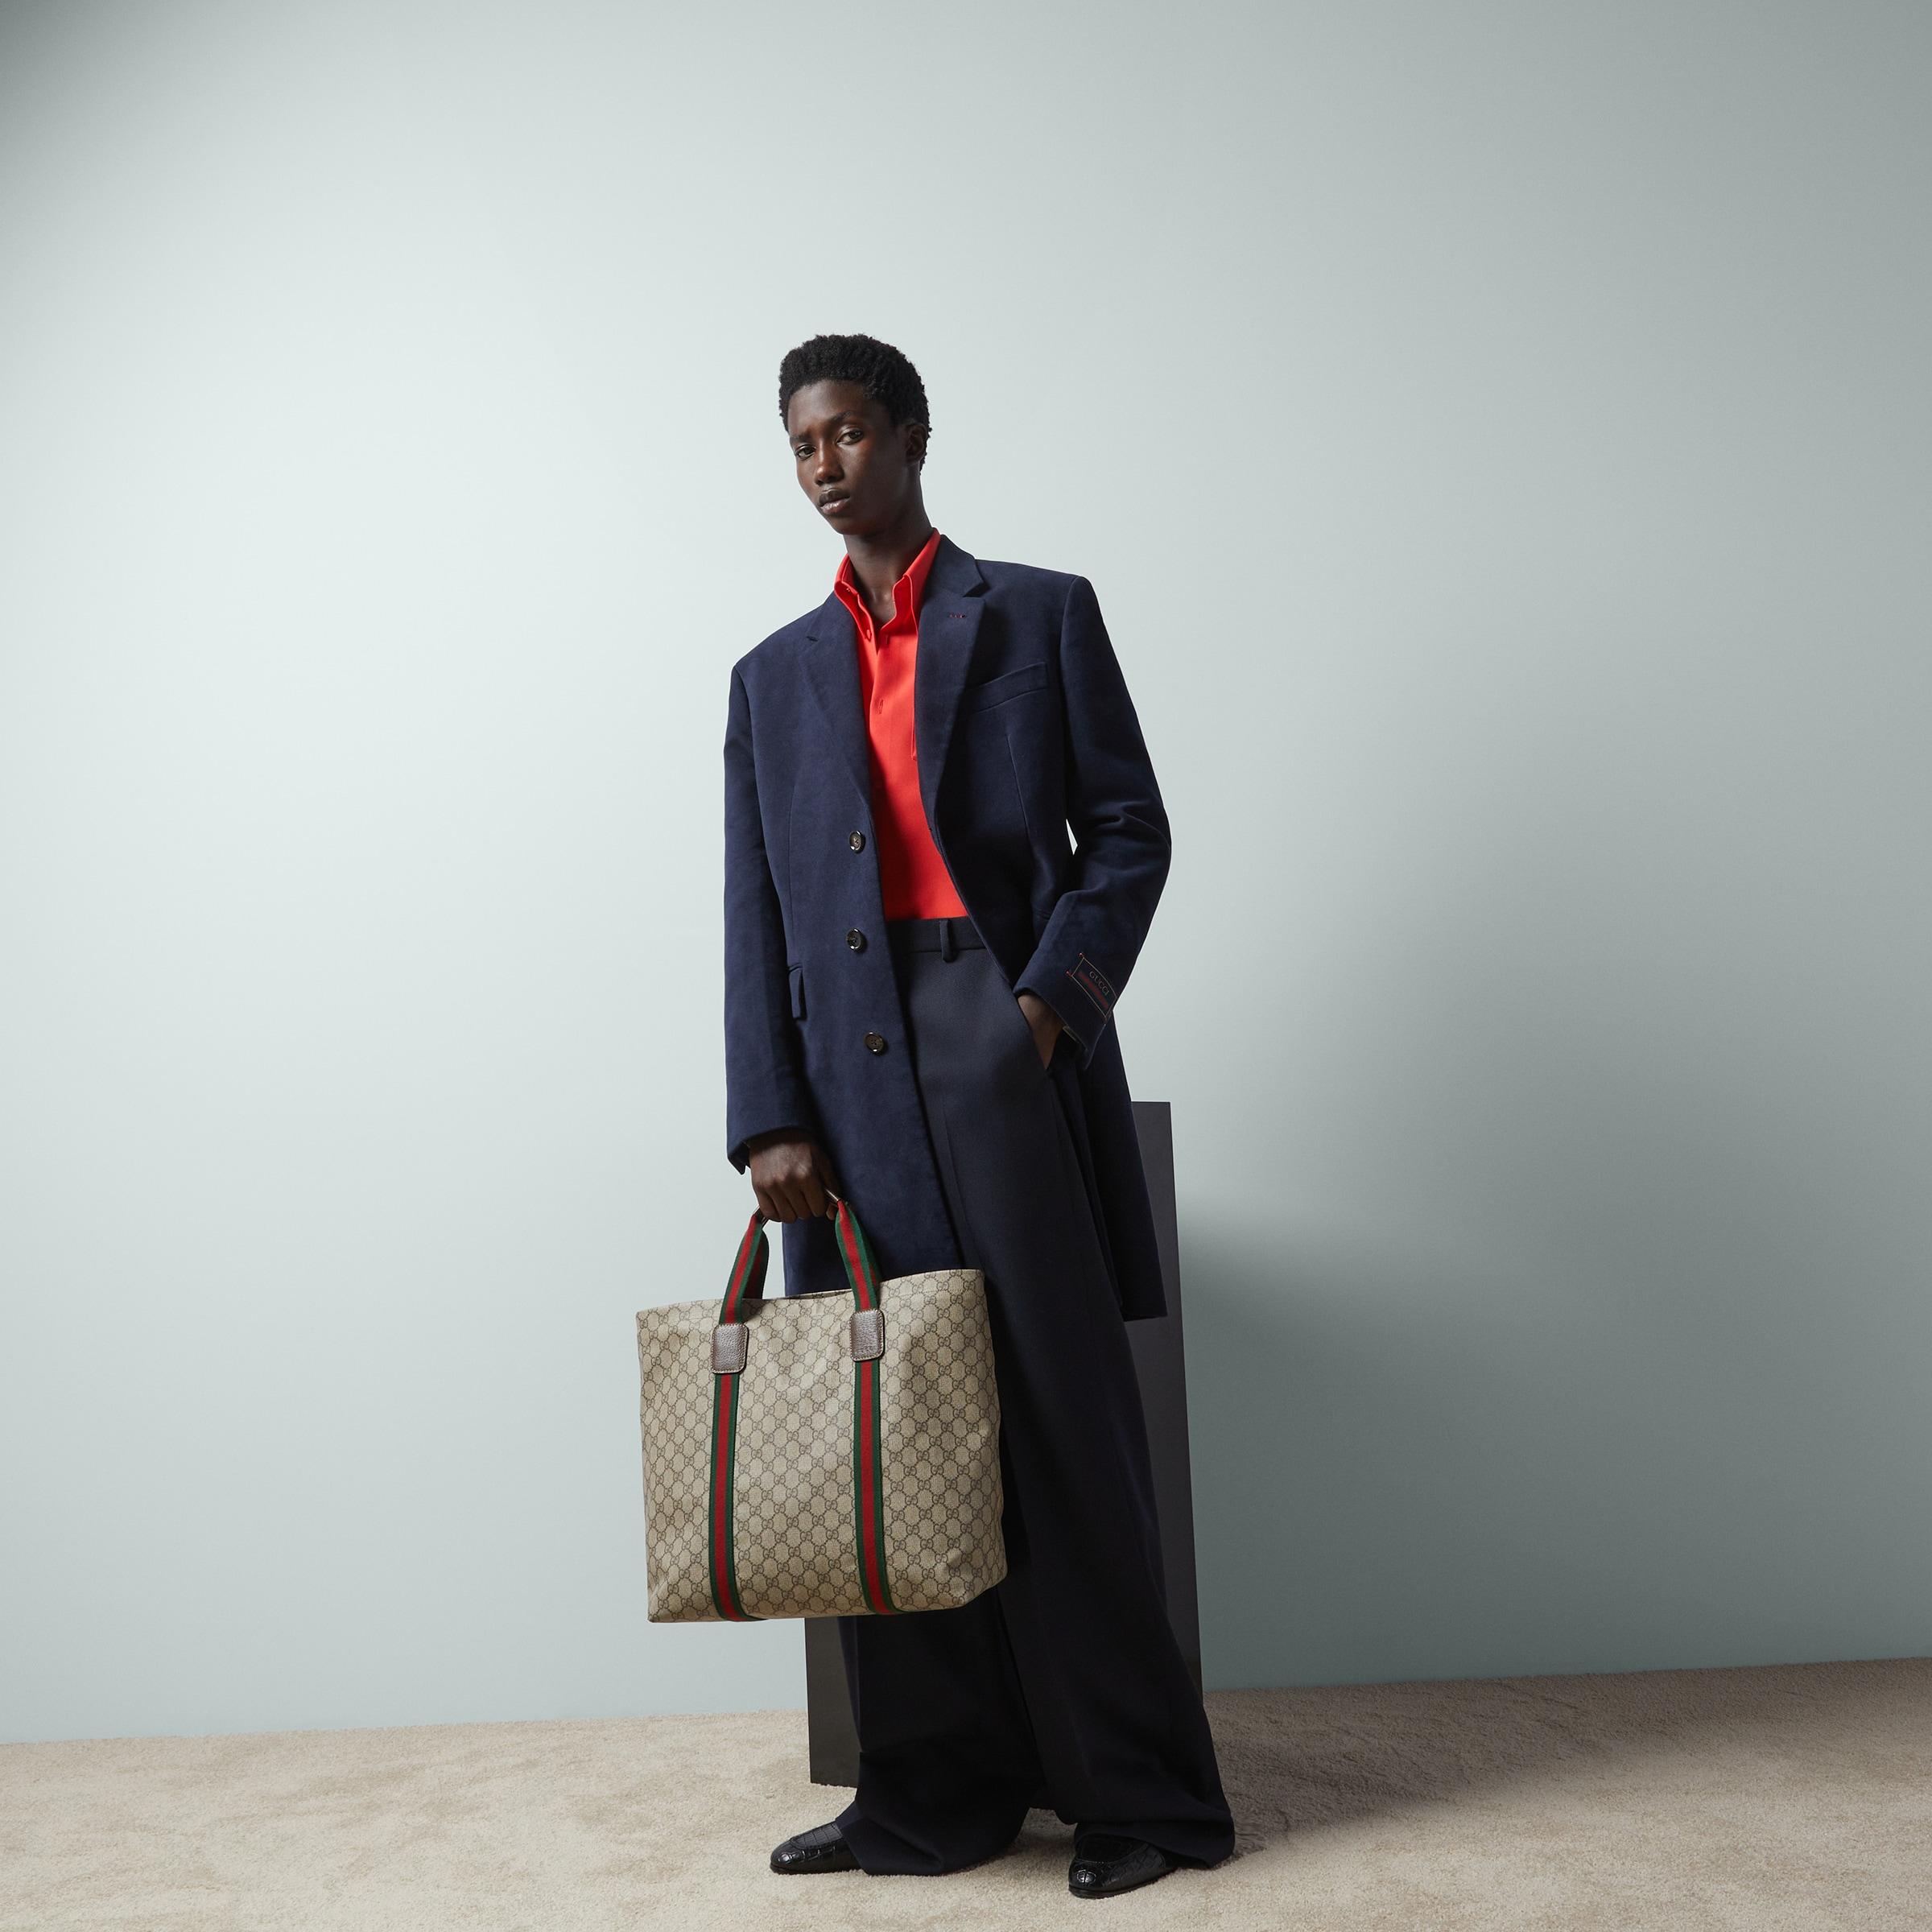 Gucci Medium GG Supreme Tote Bag in Brown for Men